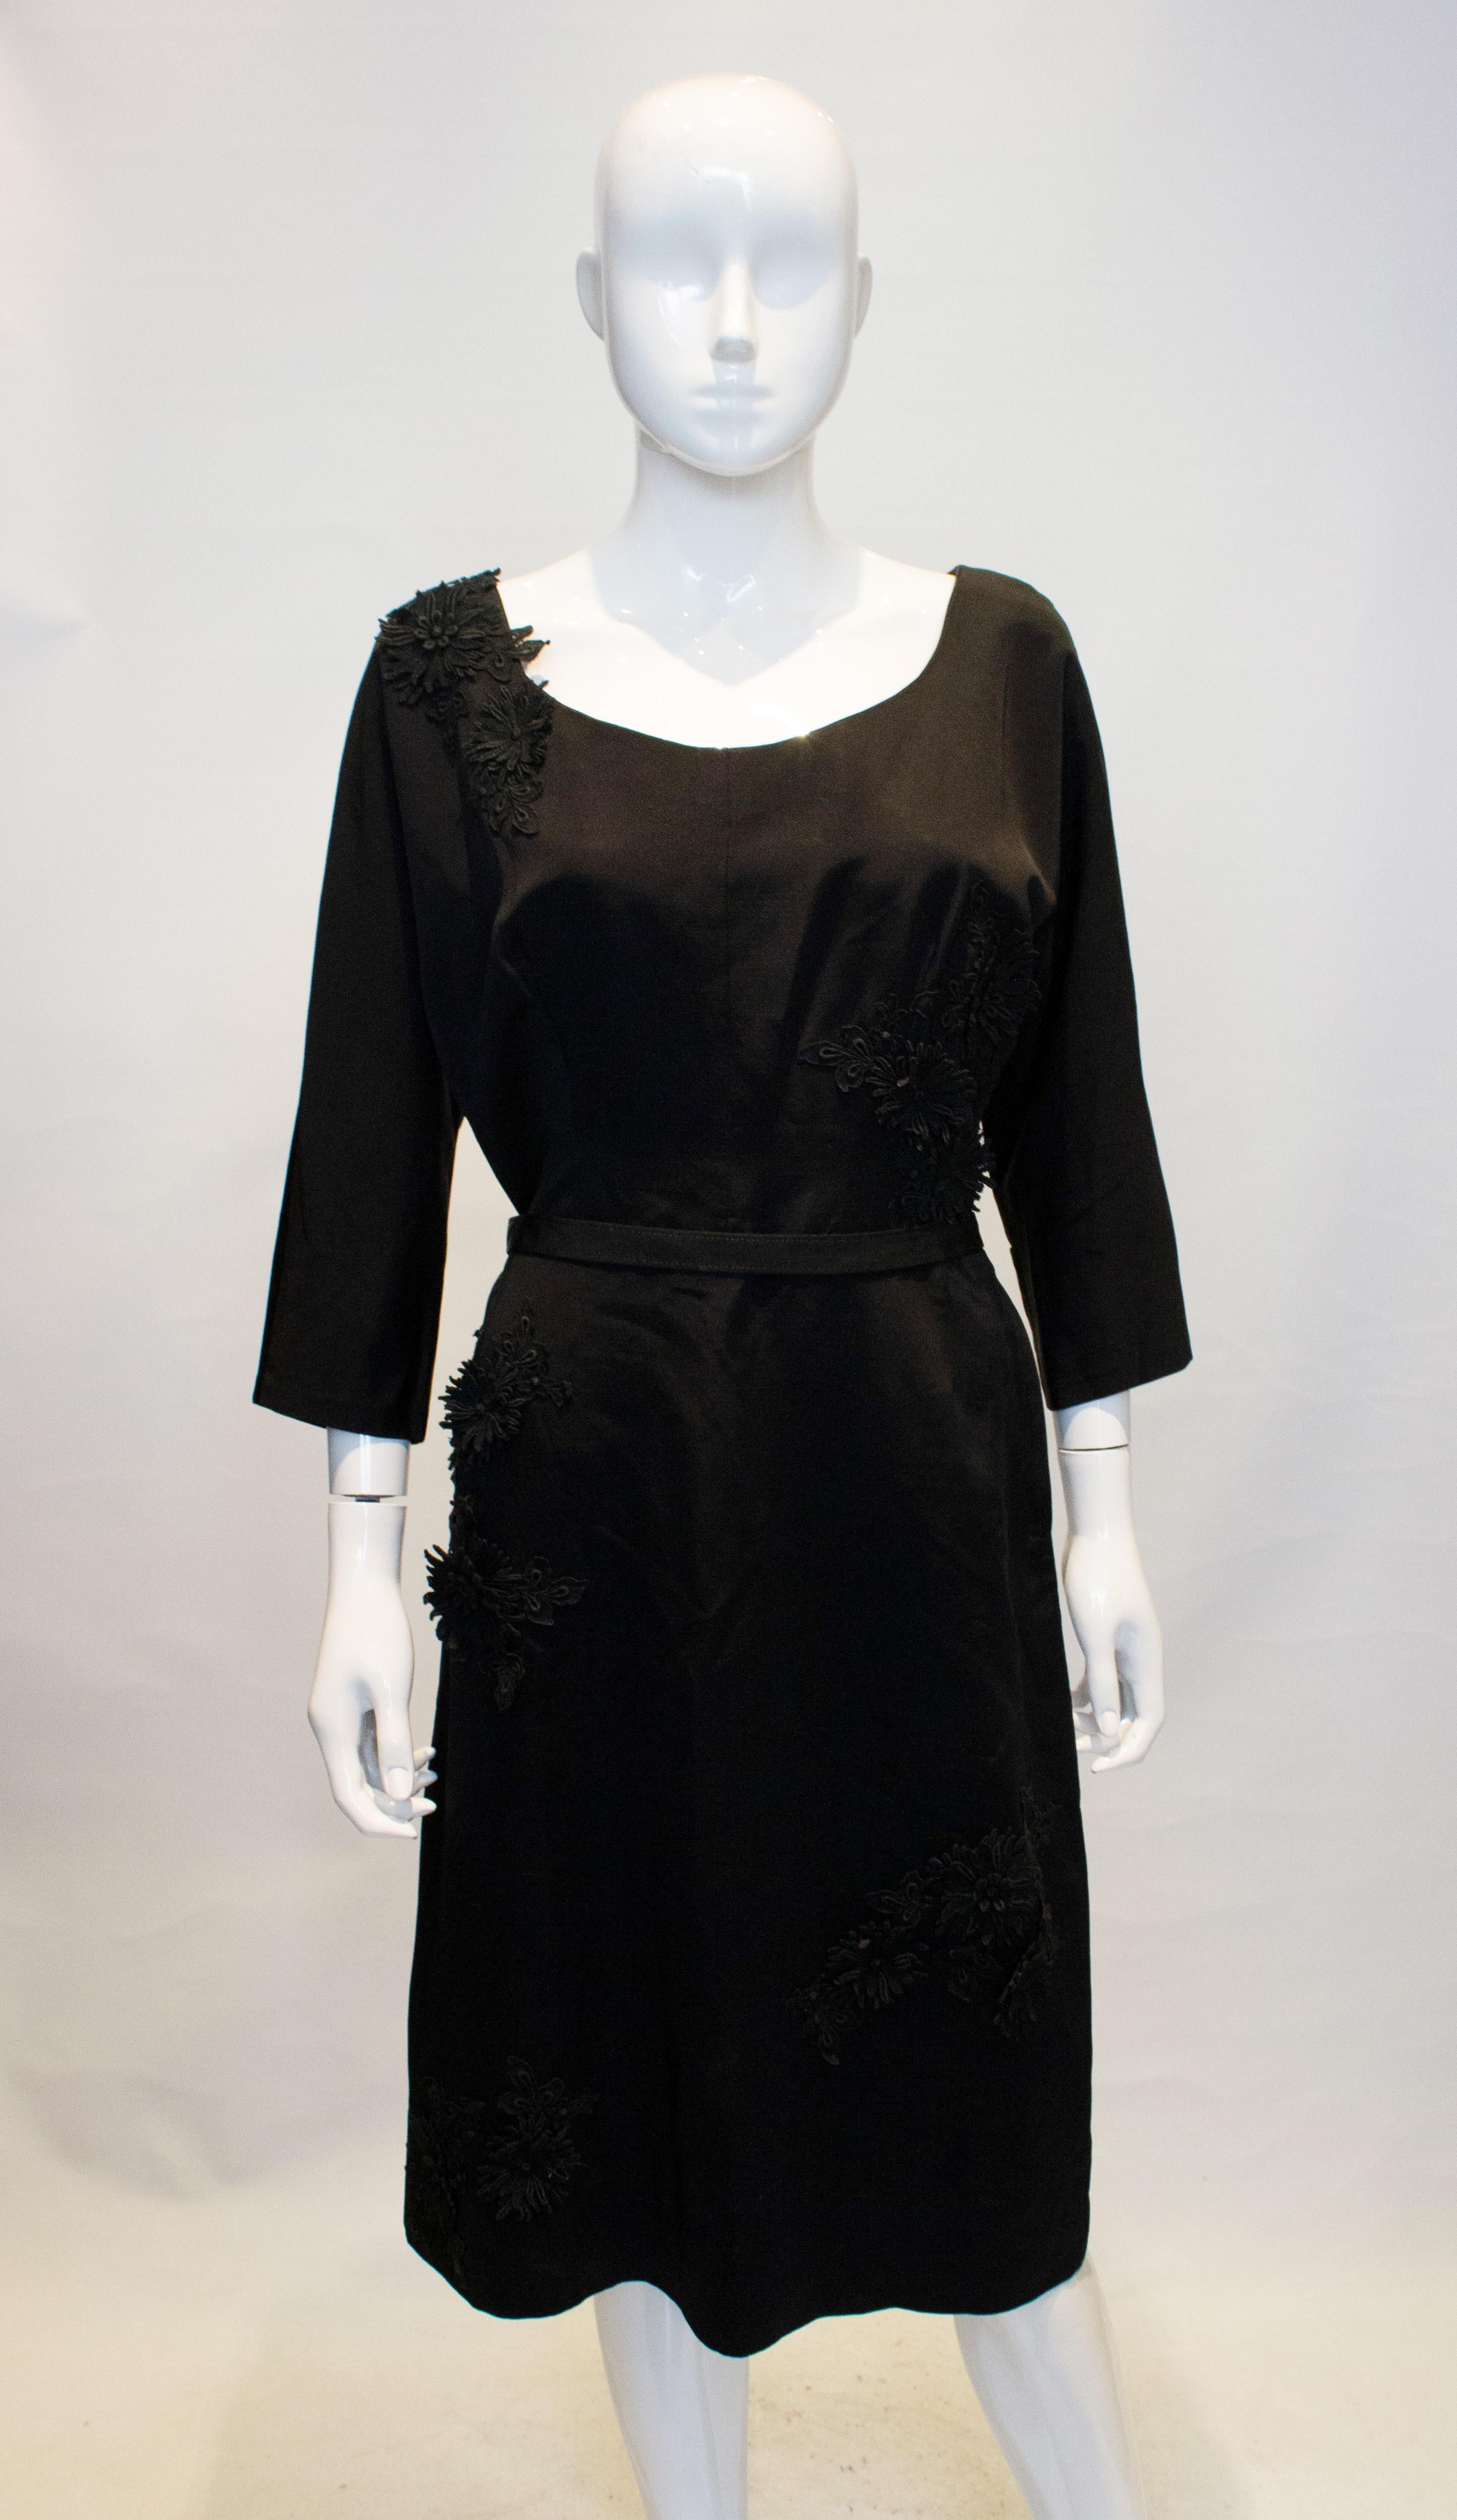 Women's Vintage Black Cocktail Dress with Floral Applique. For Sale